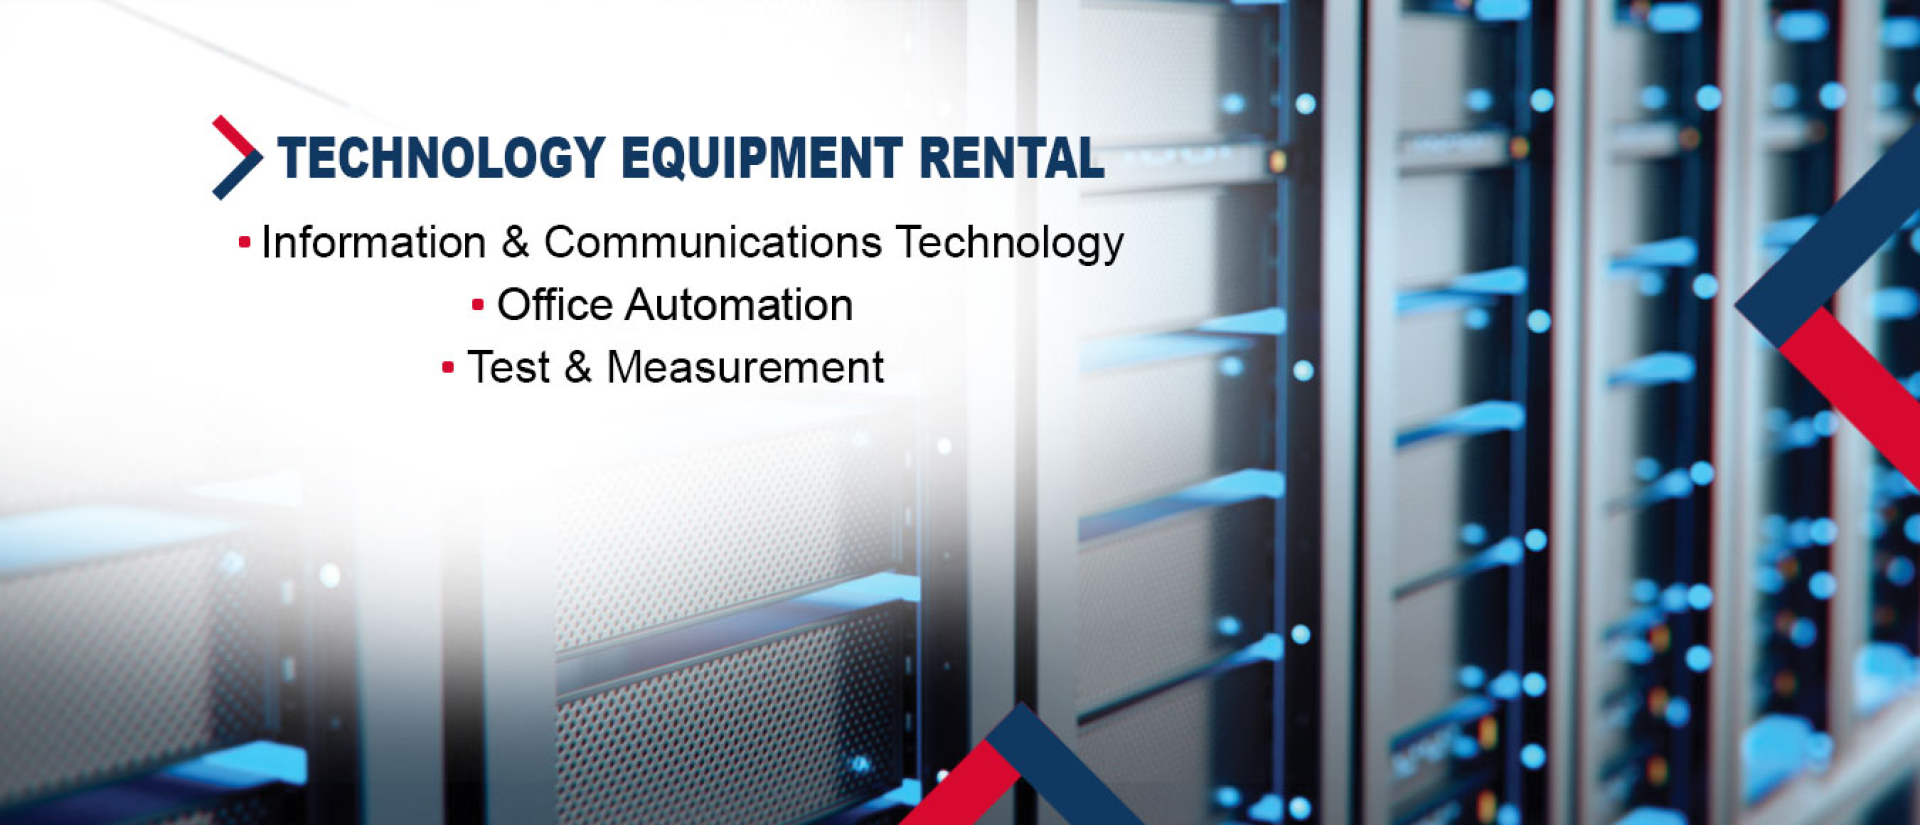 Technology Equipment Rental